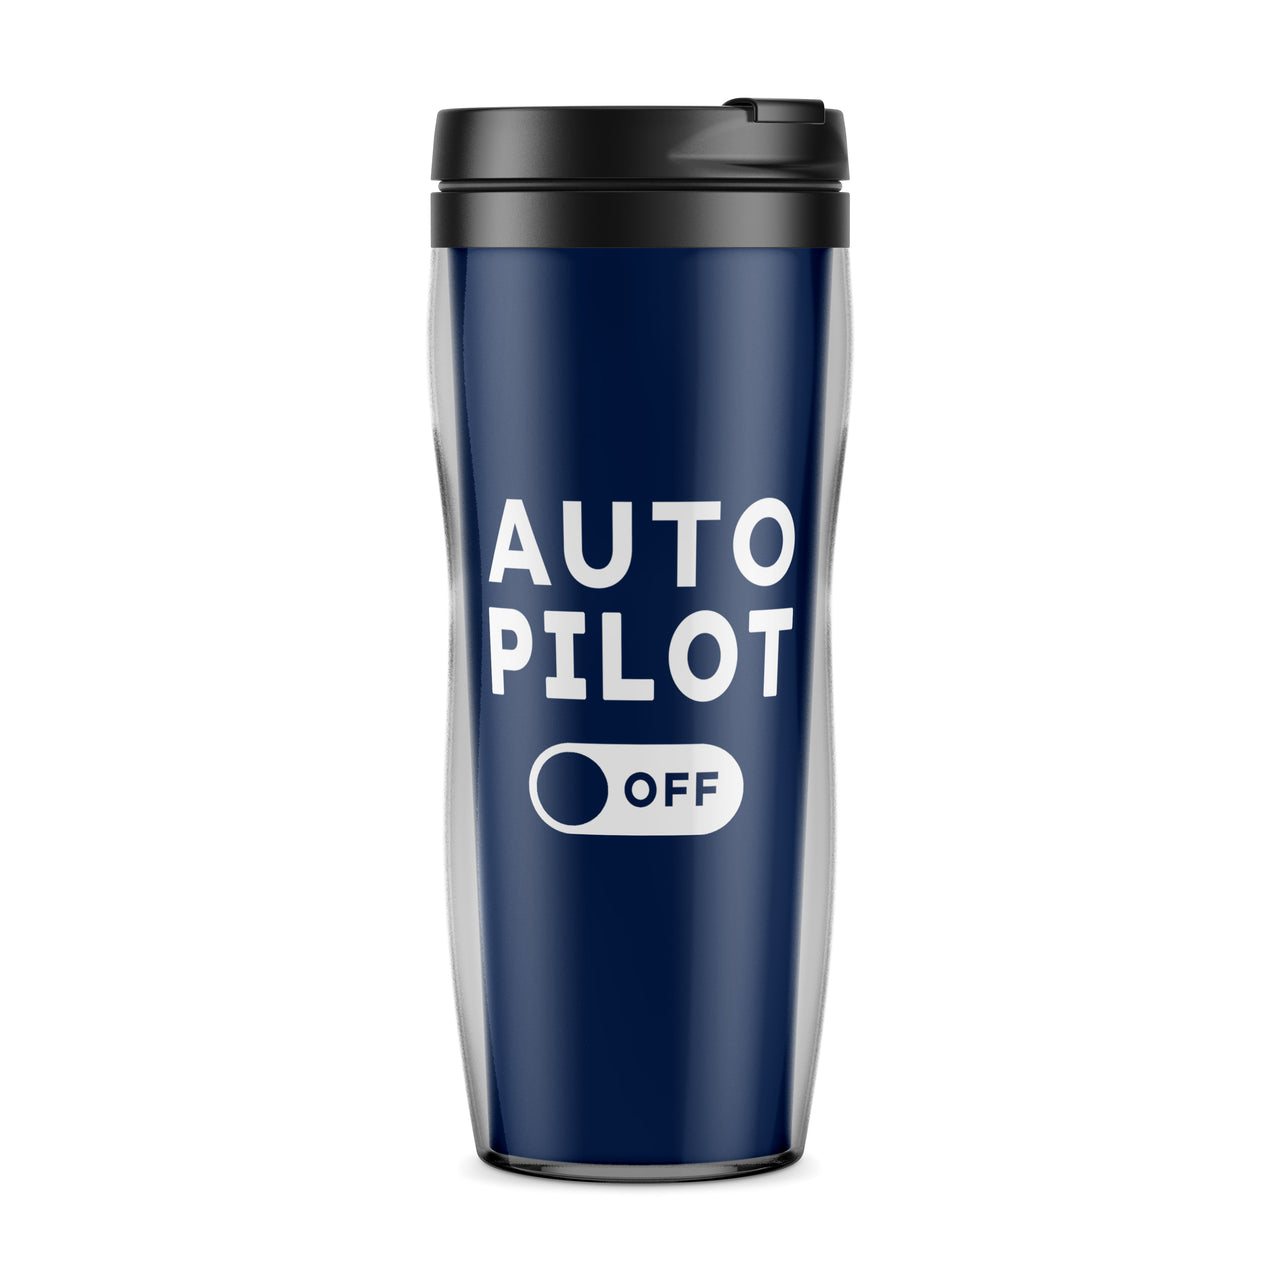 Auto Pilot Off Designed Travel Mugs